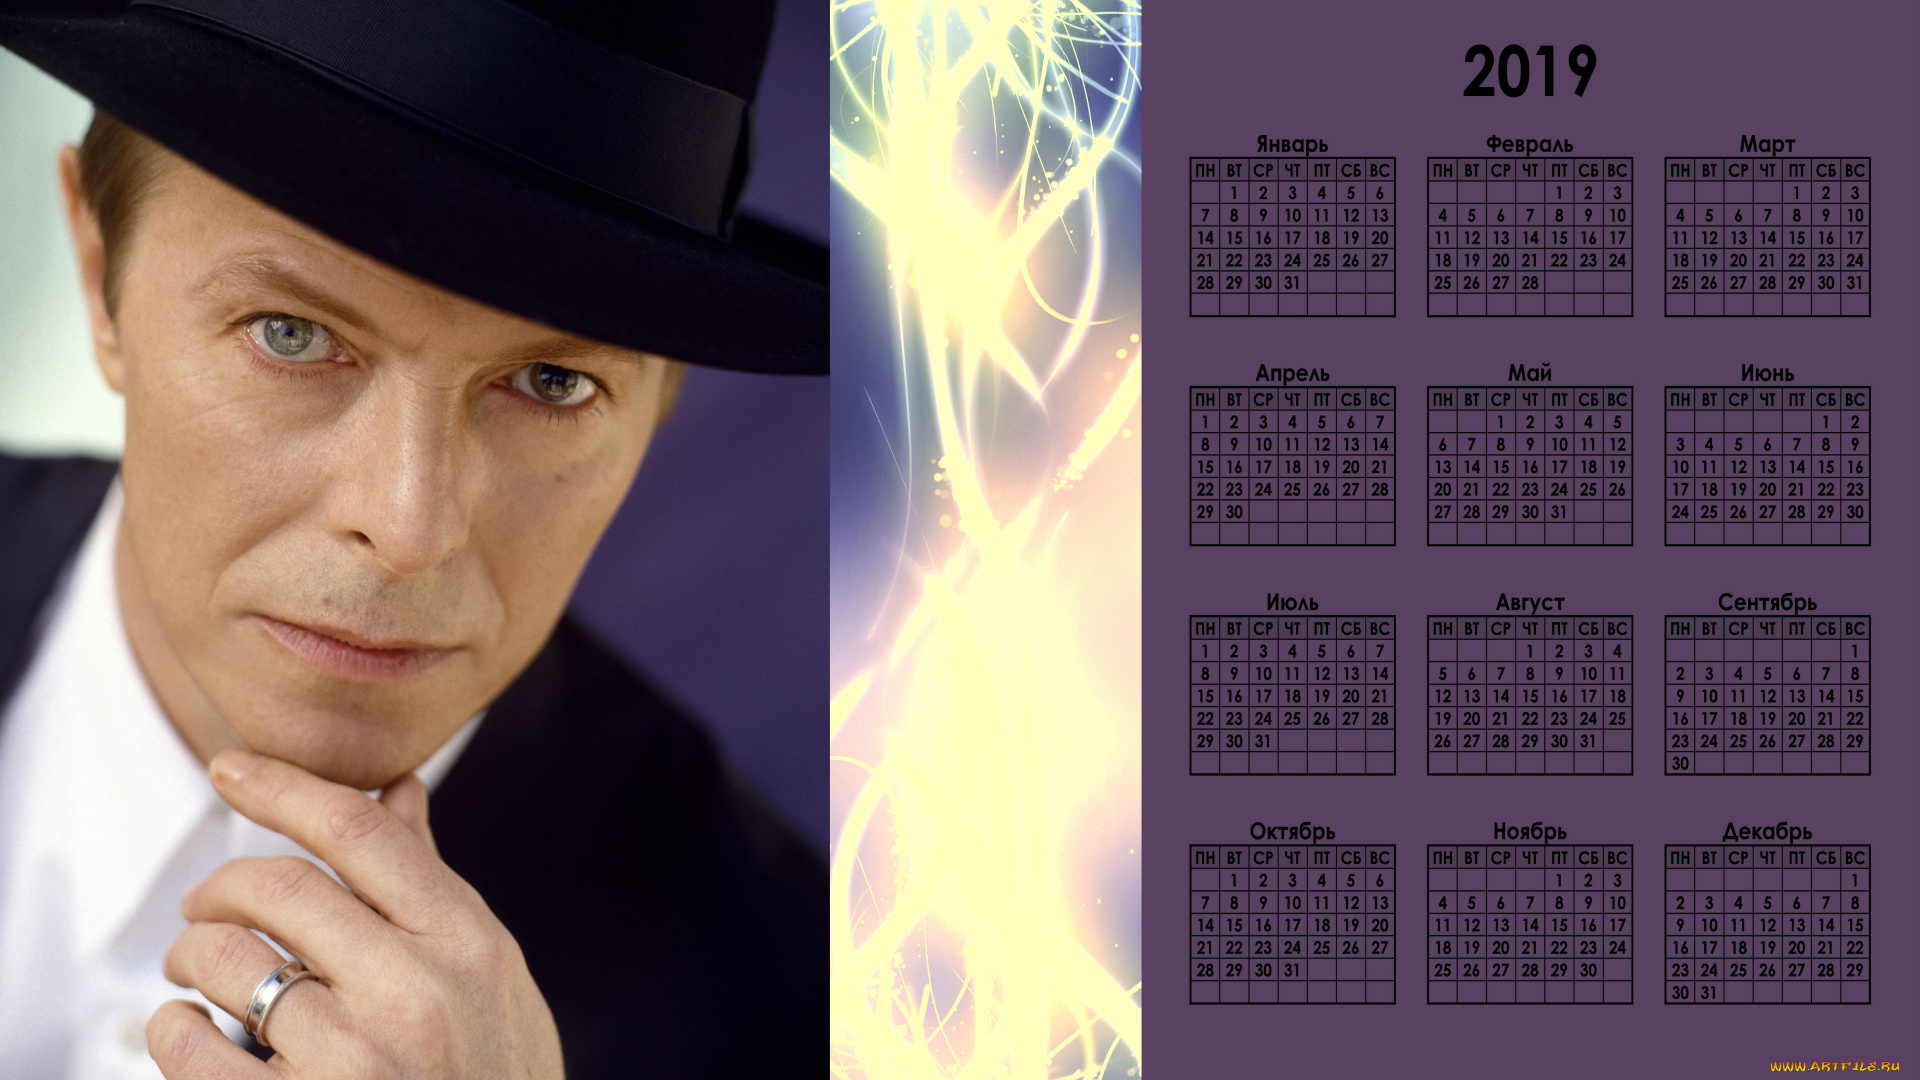 календари, знаменитости, мужчина, взгляд, шляпа, музыкант